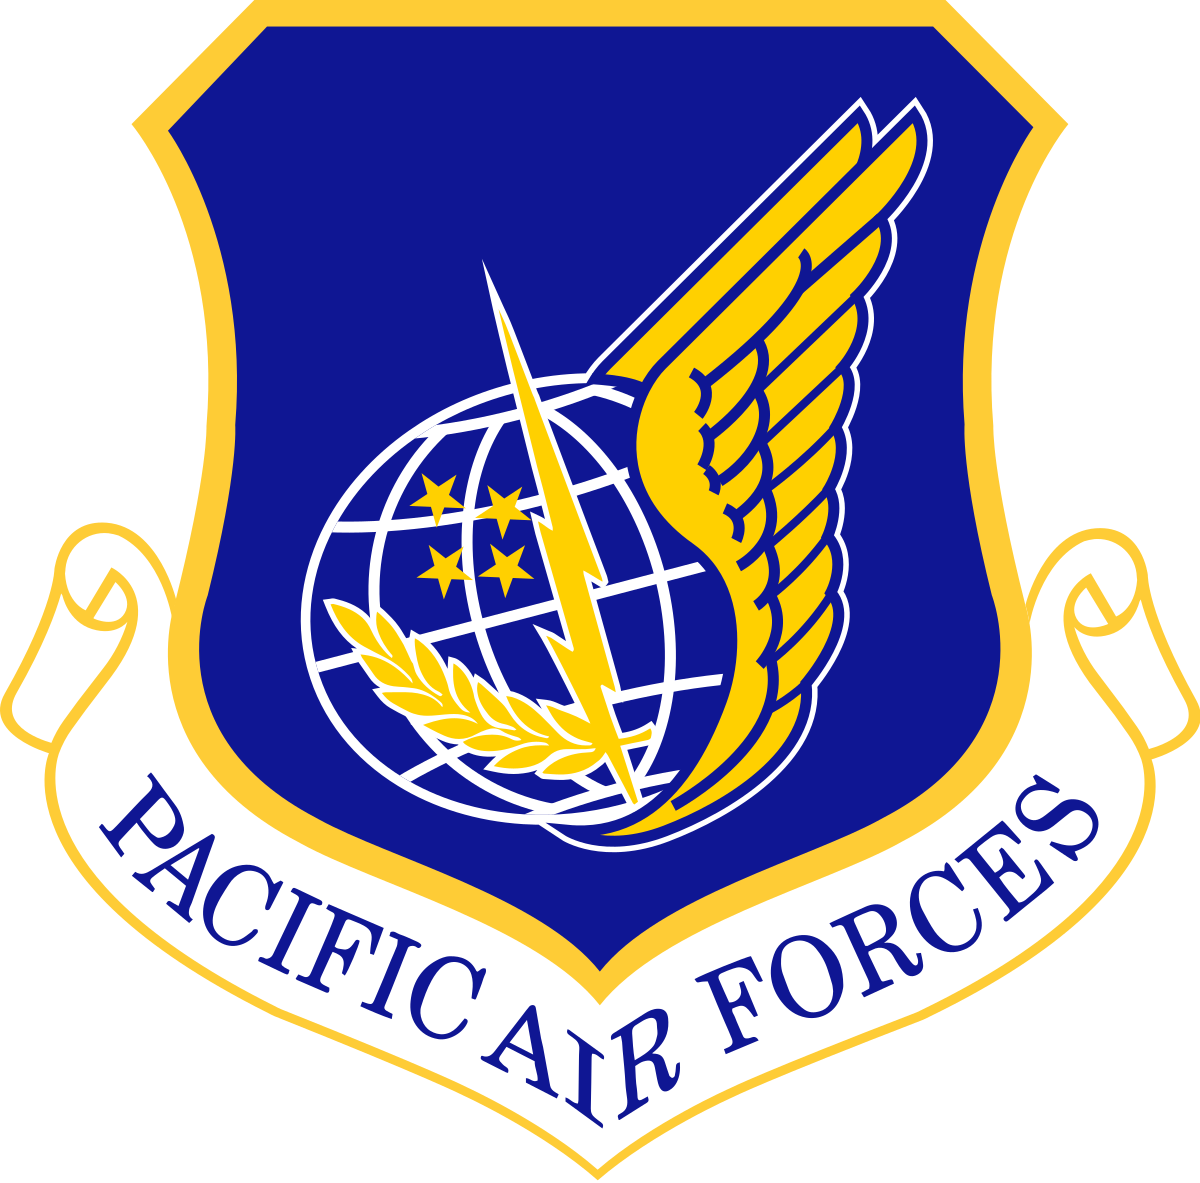 Air Force PNG Image File